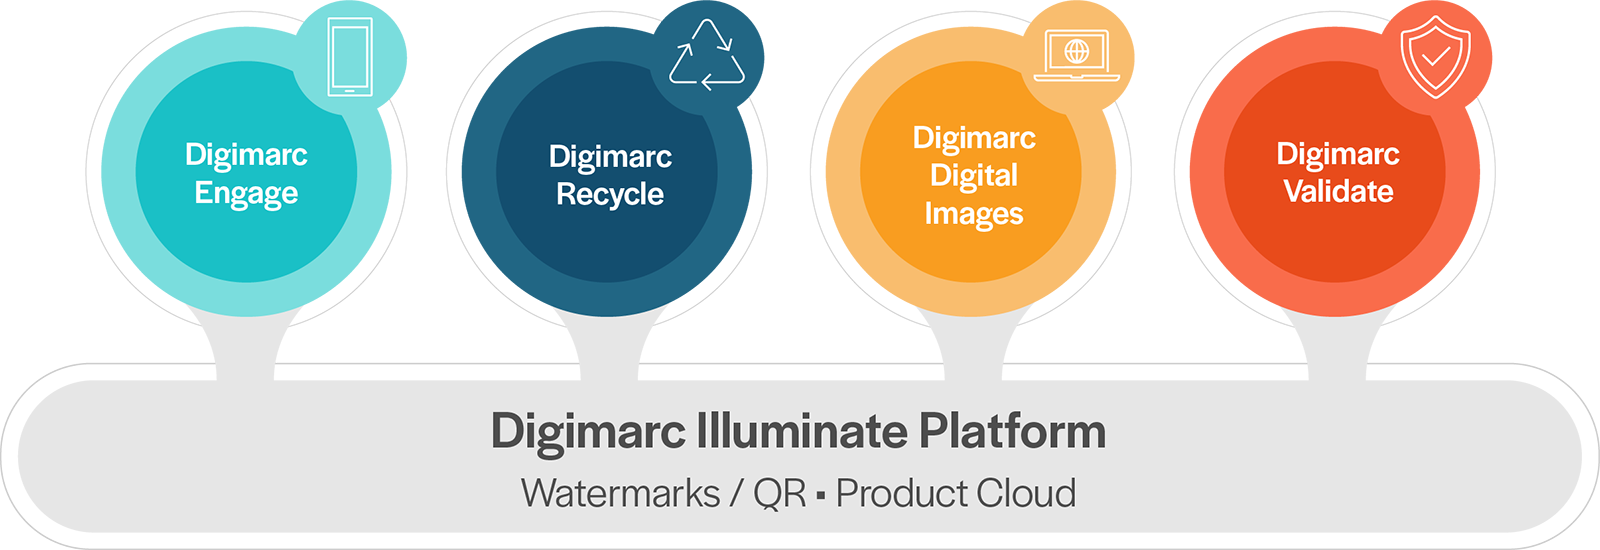 Digimarc Product Digitization Platform graphic